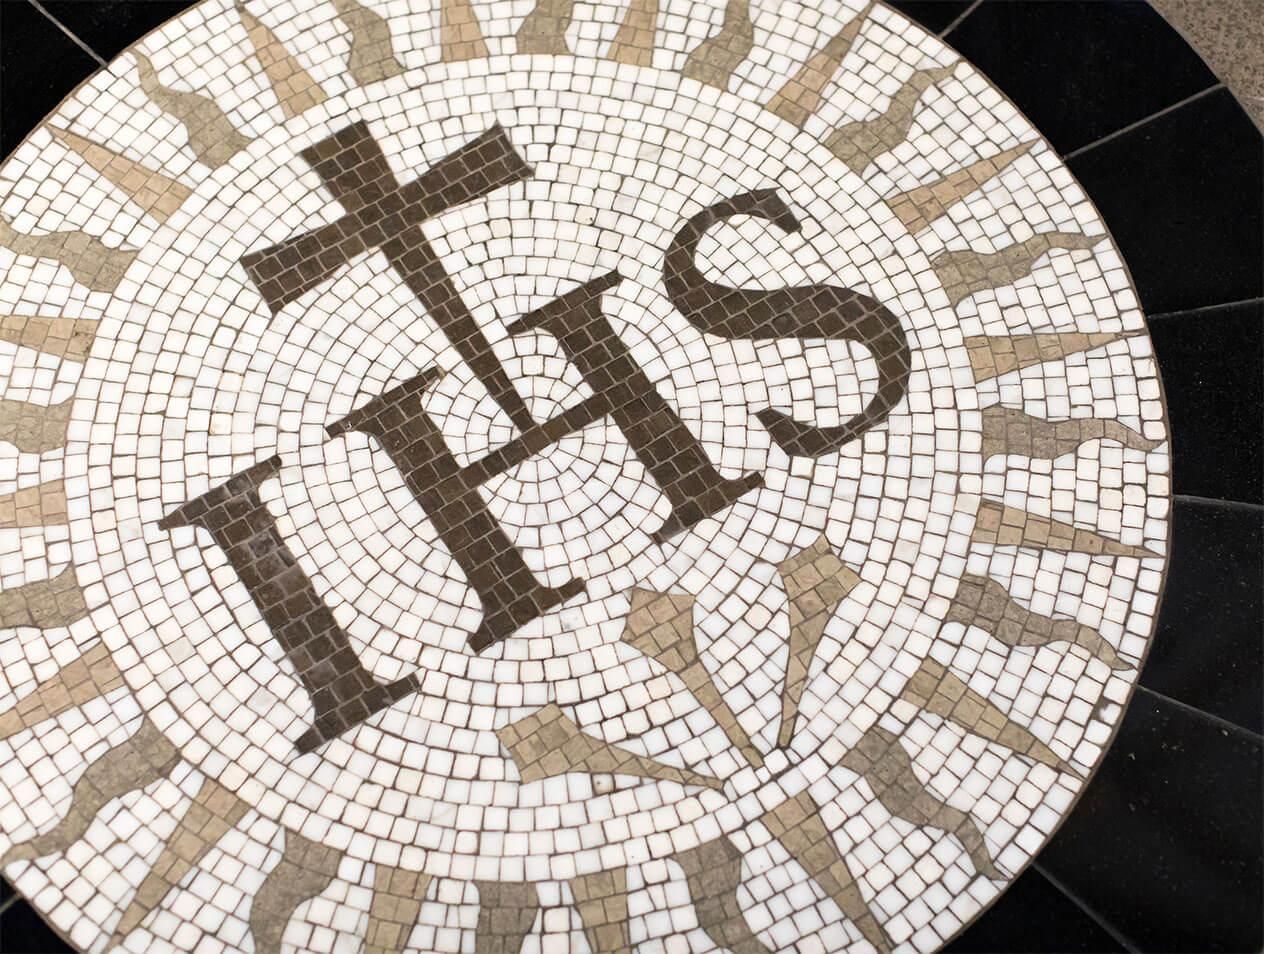 IHS crest in a tile floor